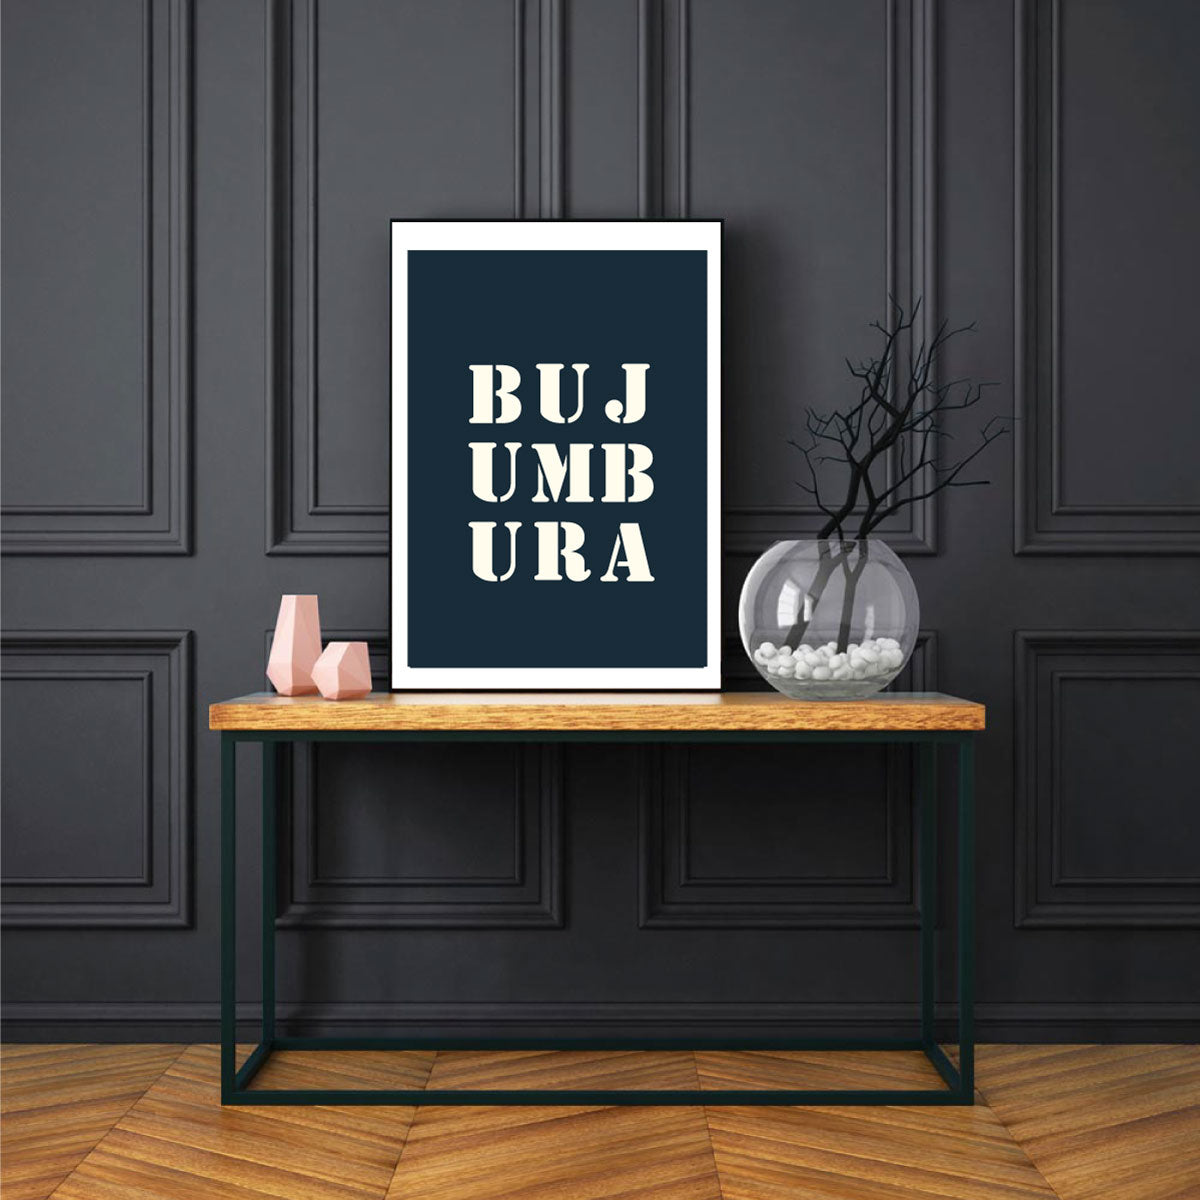 Affiche "Bujumbura" bleu nuit